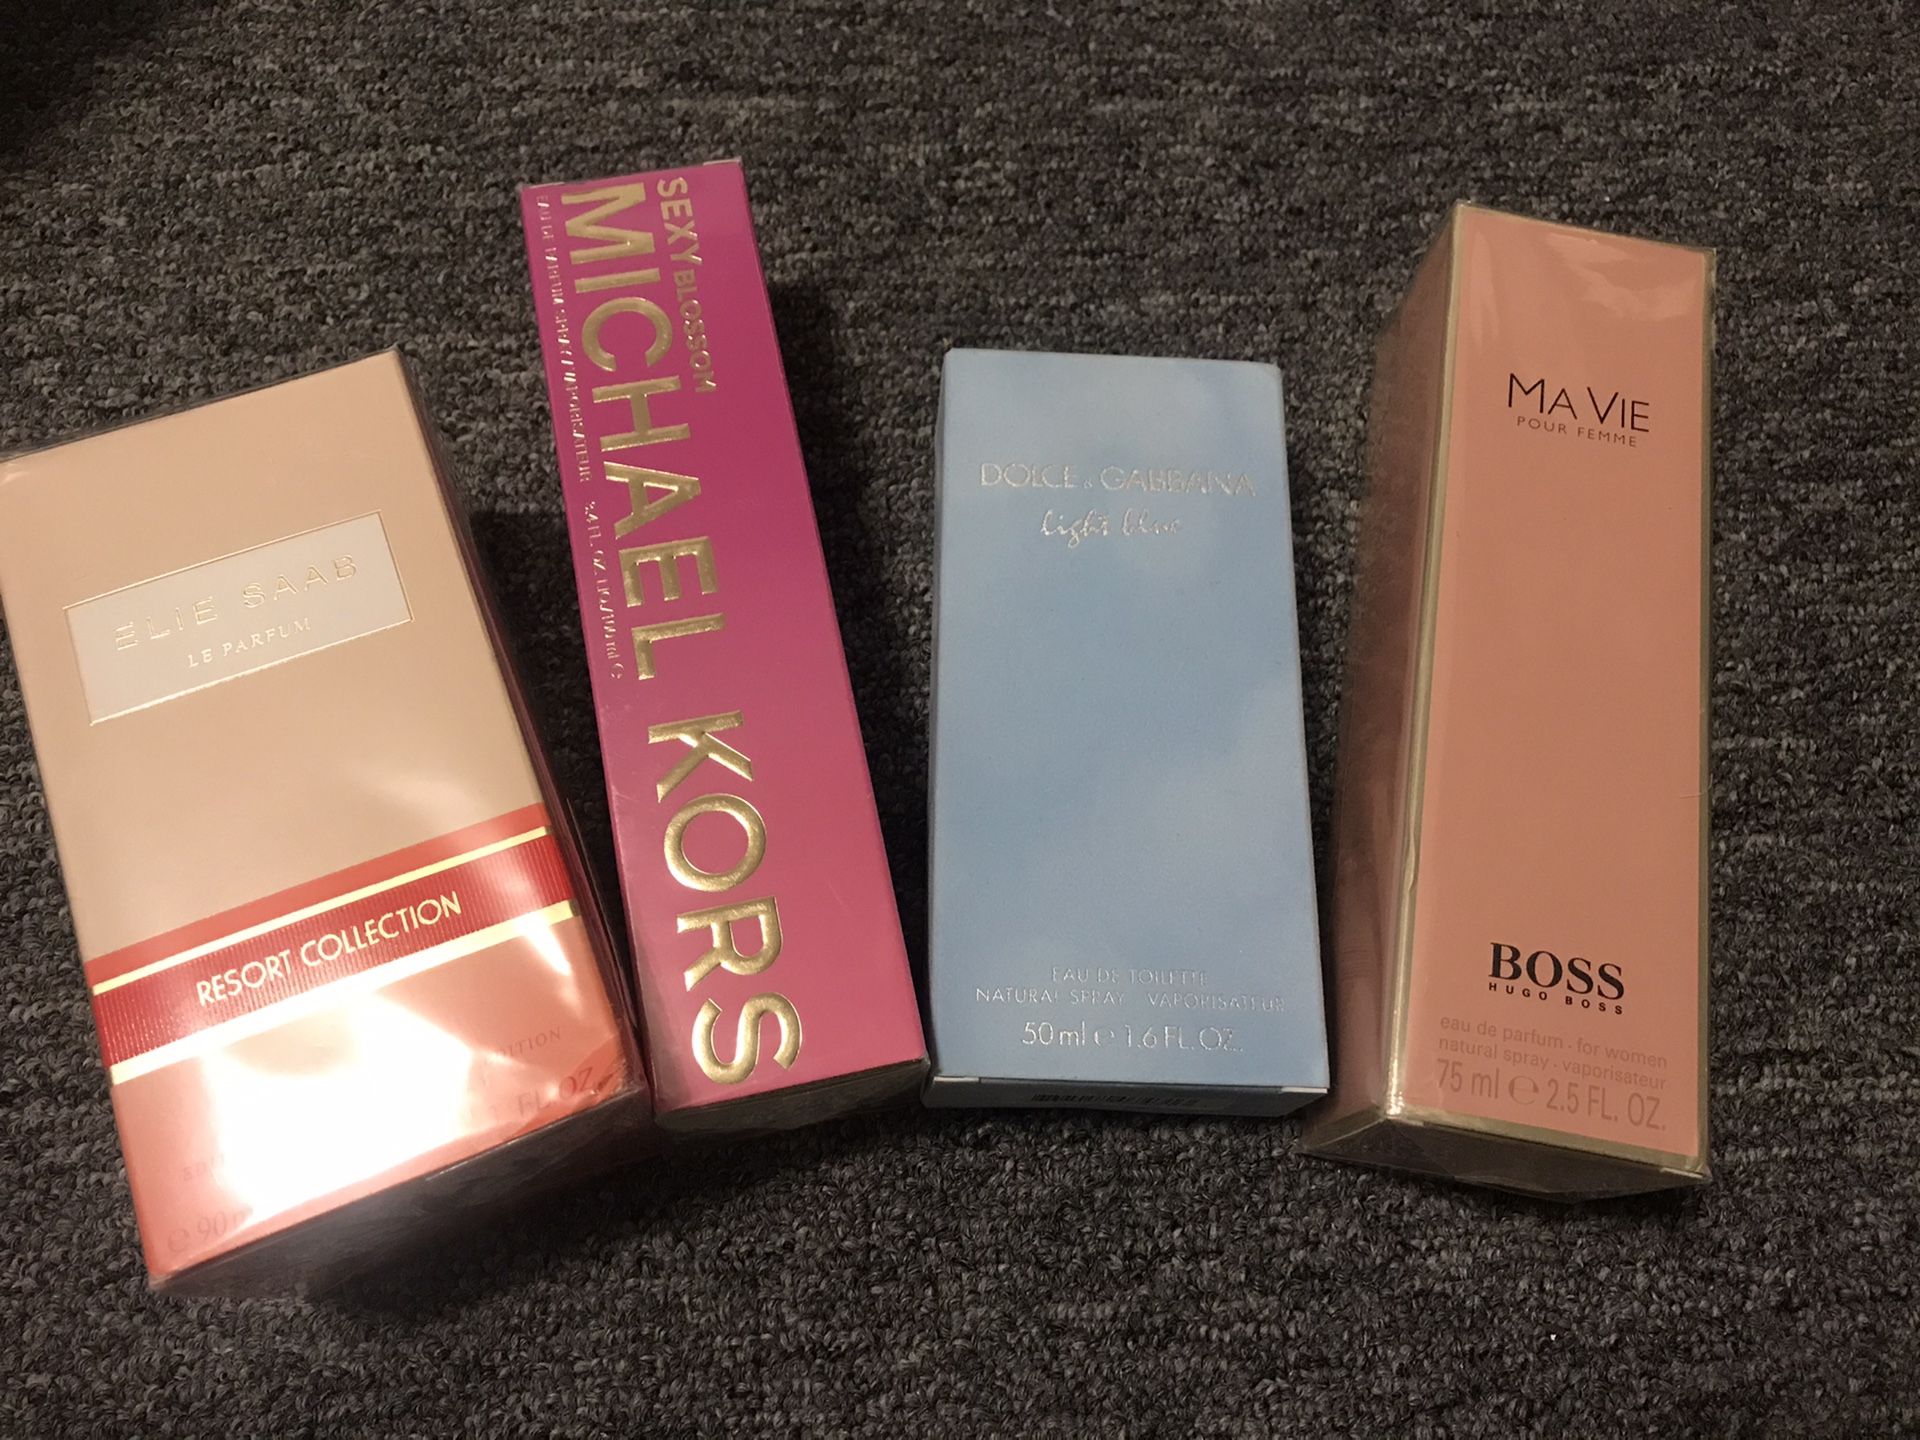 New woman’s perfume $50 each